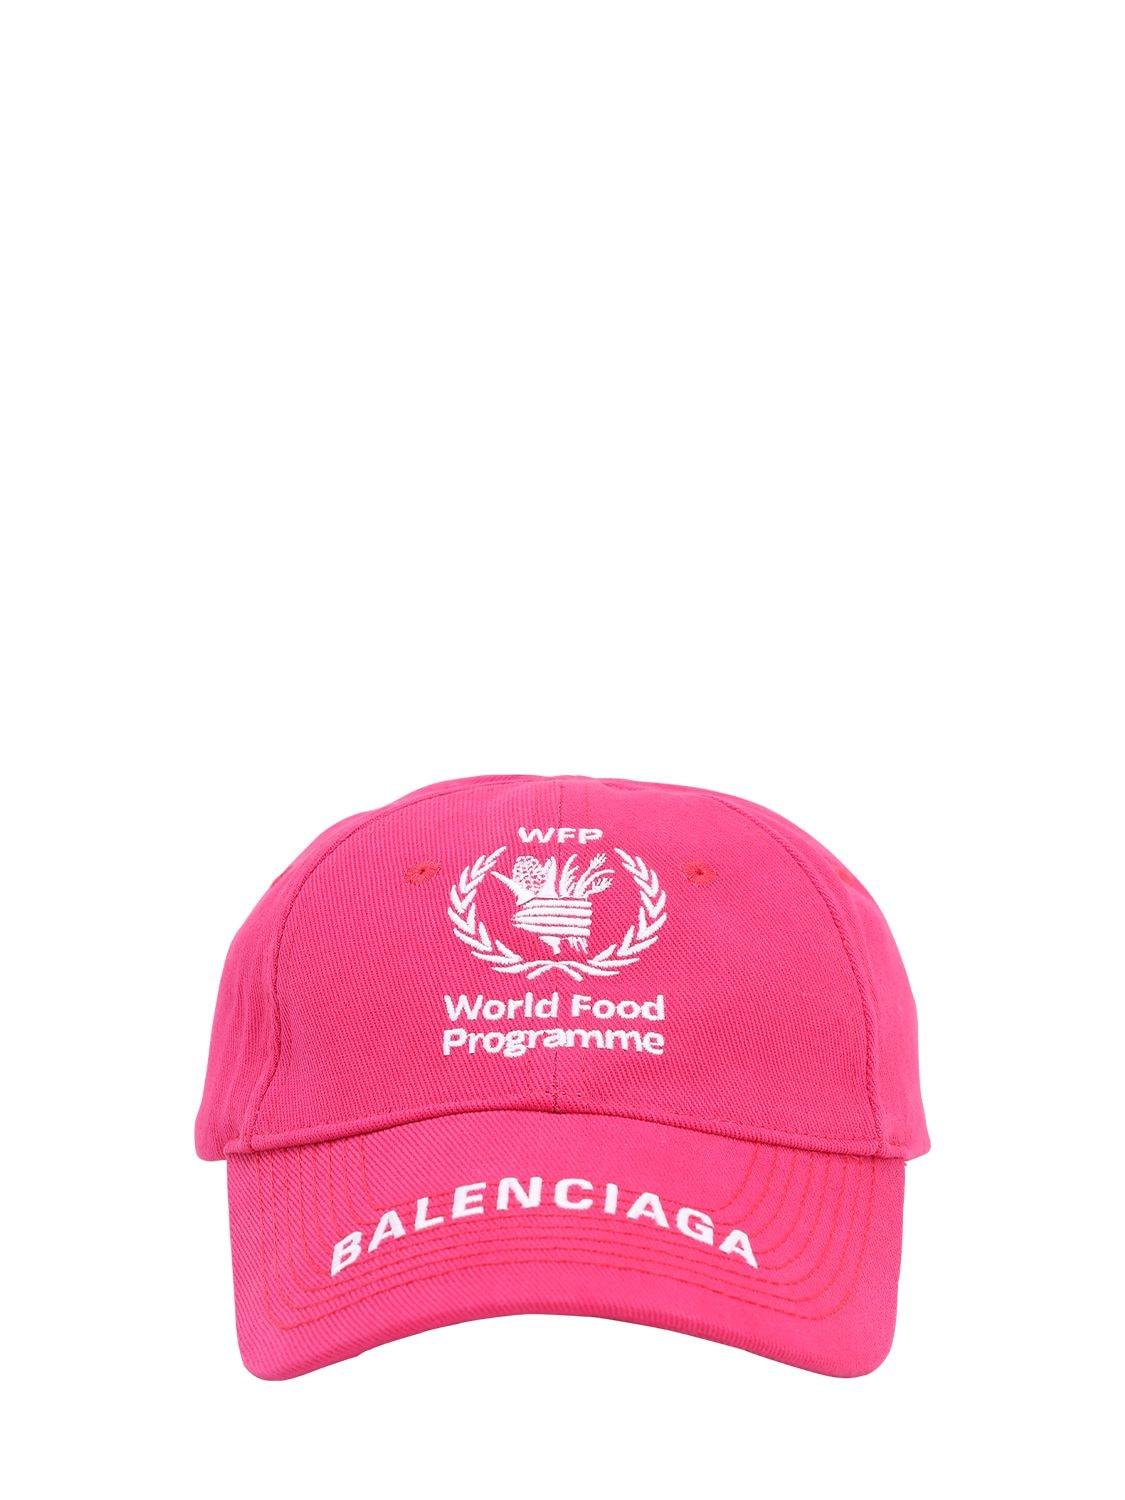 BALENCIAGA WFP PRINT COTTON BASEBALL HAT,71IX2X007-NTY3NW2